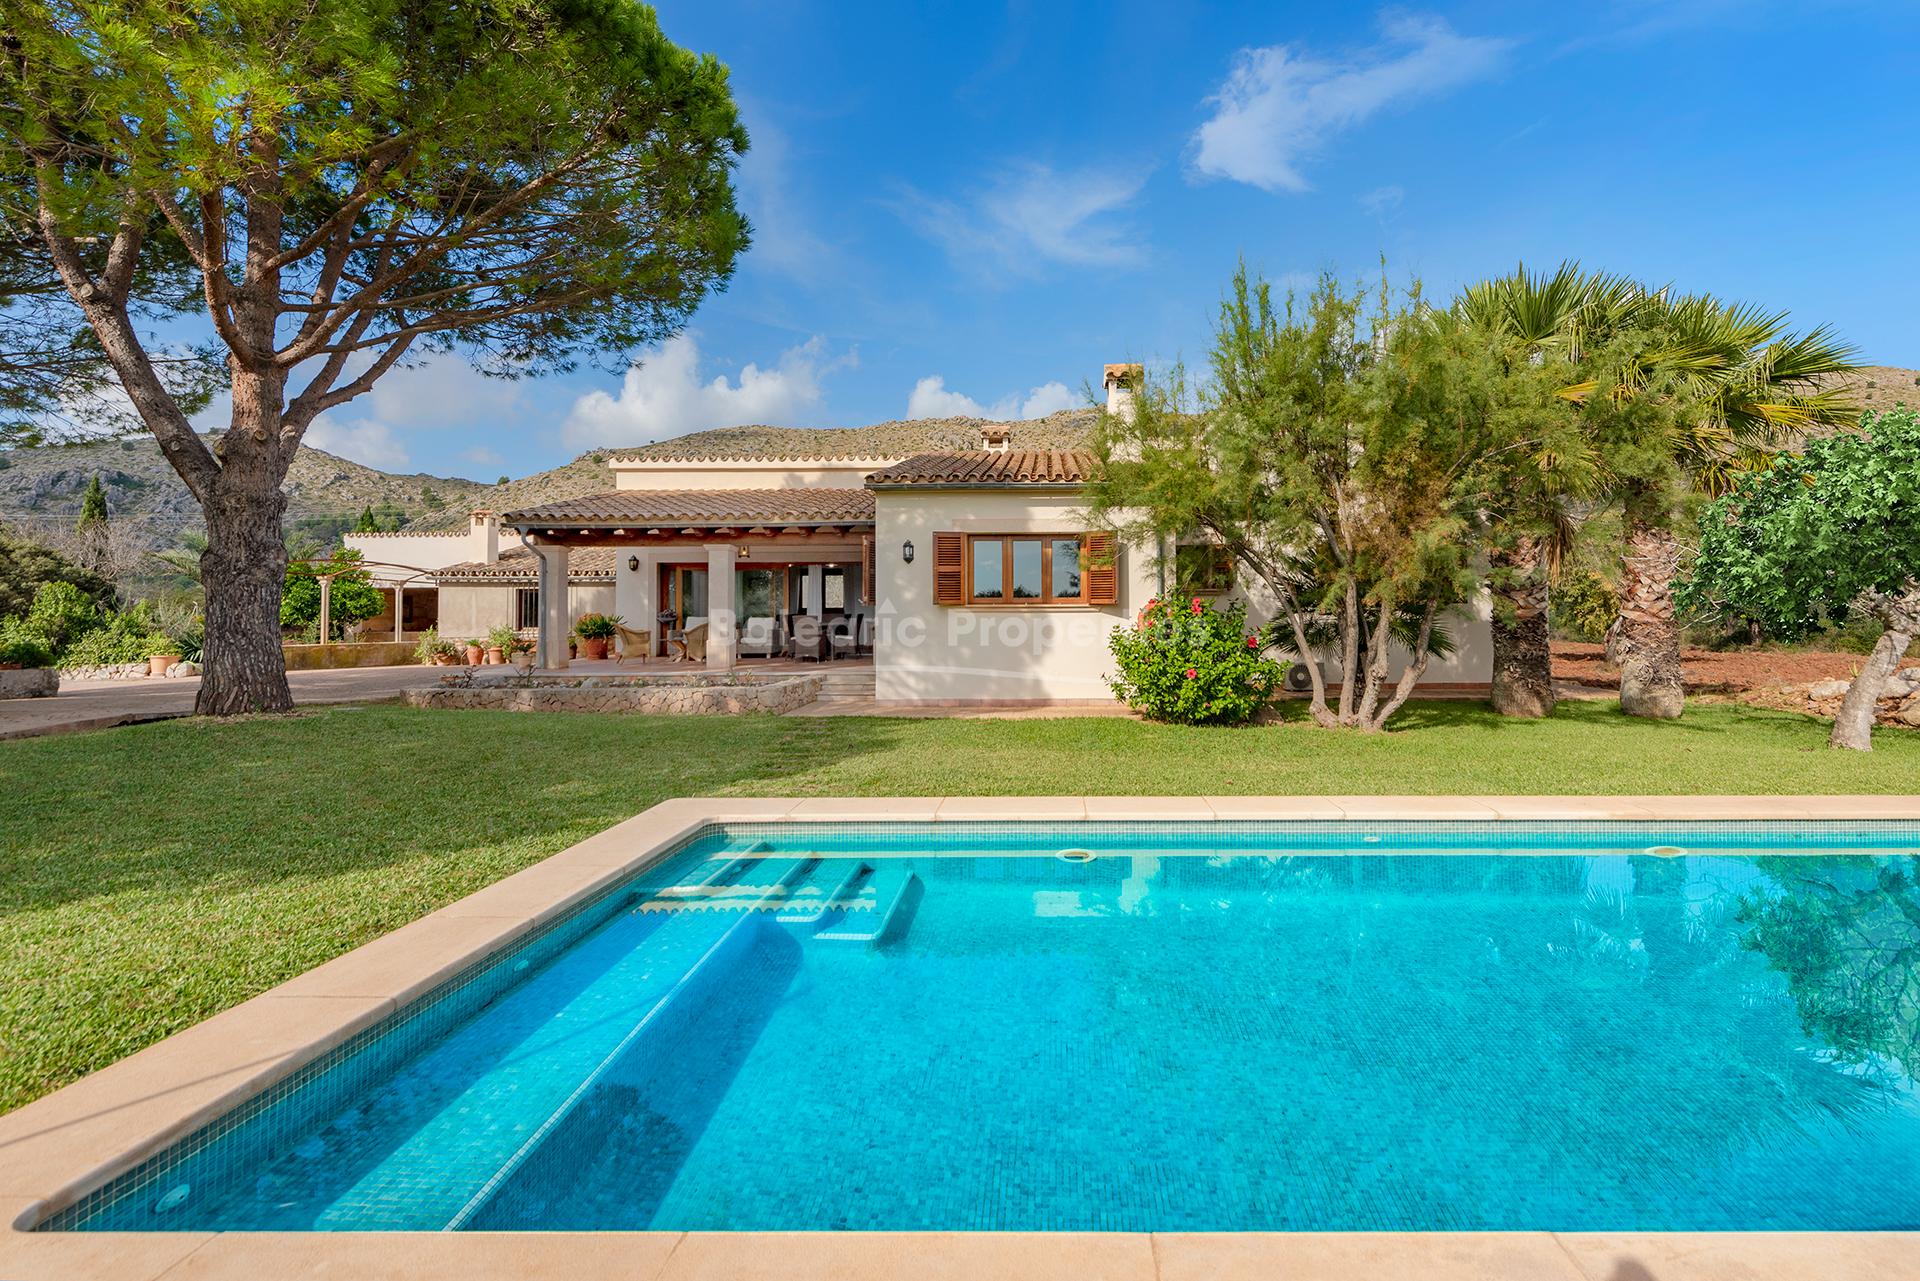 Preciosa villa de campo con licencia de alquiler vacacional en venta en Pollensa, Mallorca